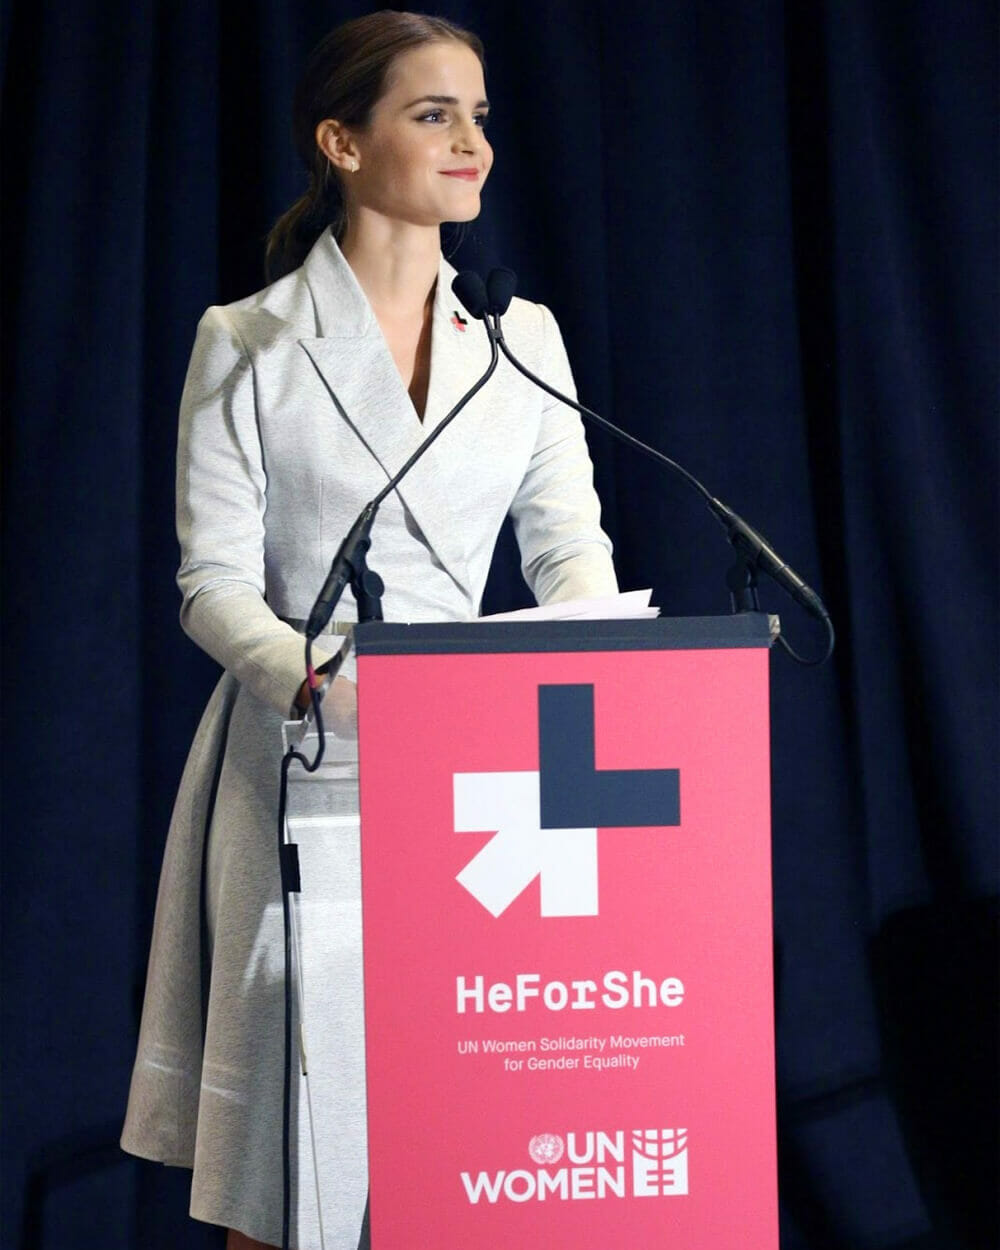 Campania „HeForShe” Emma Watson - 2014